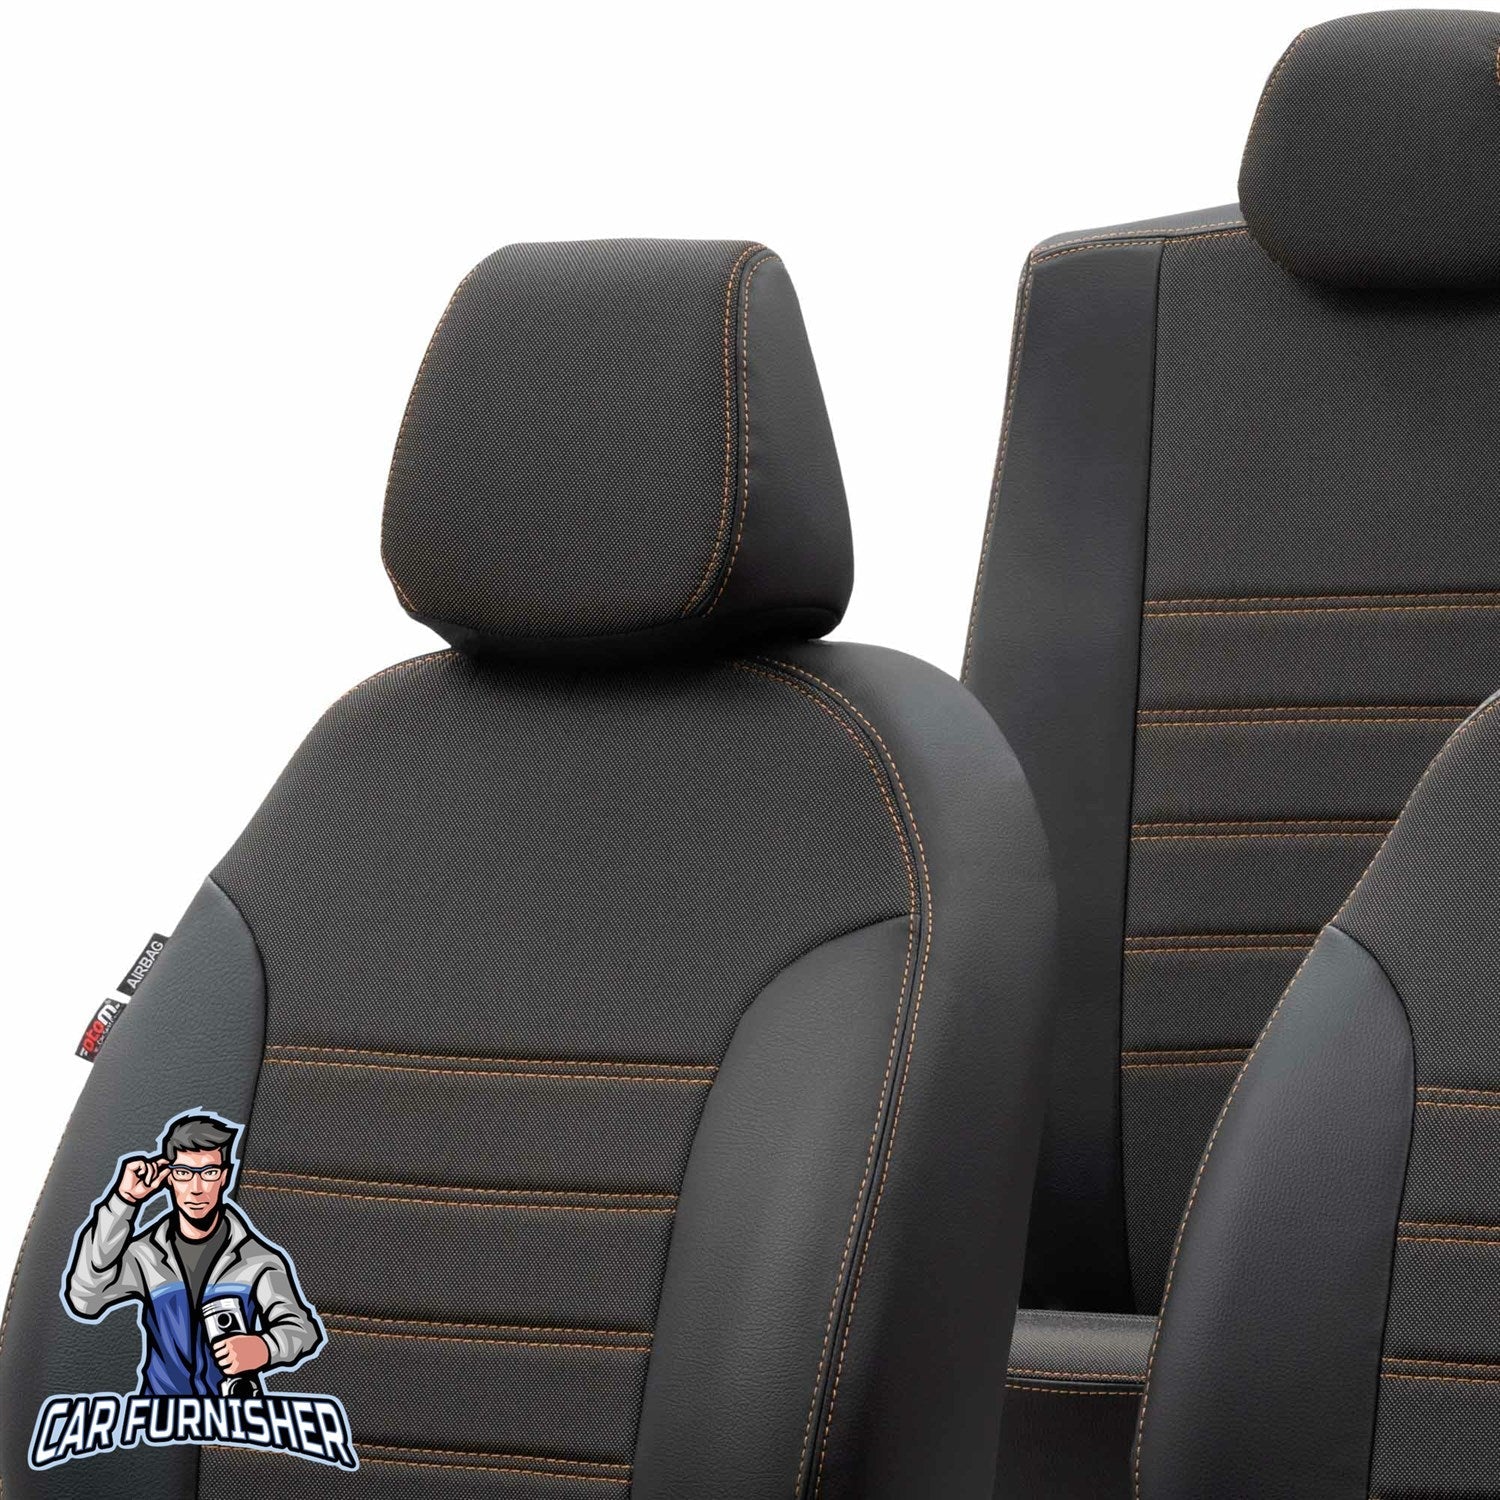 Mercedes GLC Class Seat Covers Paris Leather & Jacquard Design Dark Beige Leather & Jacquard Fabric